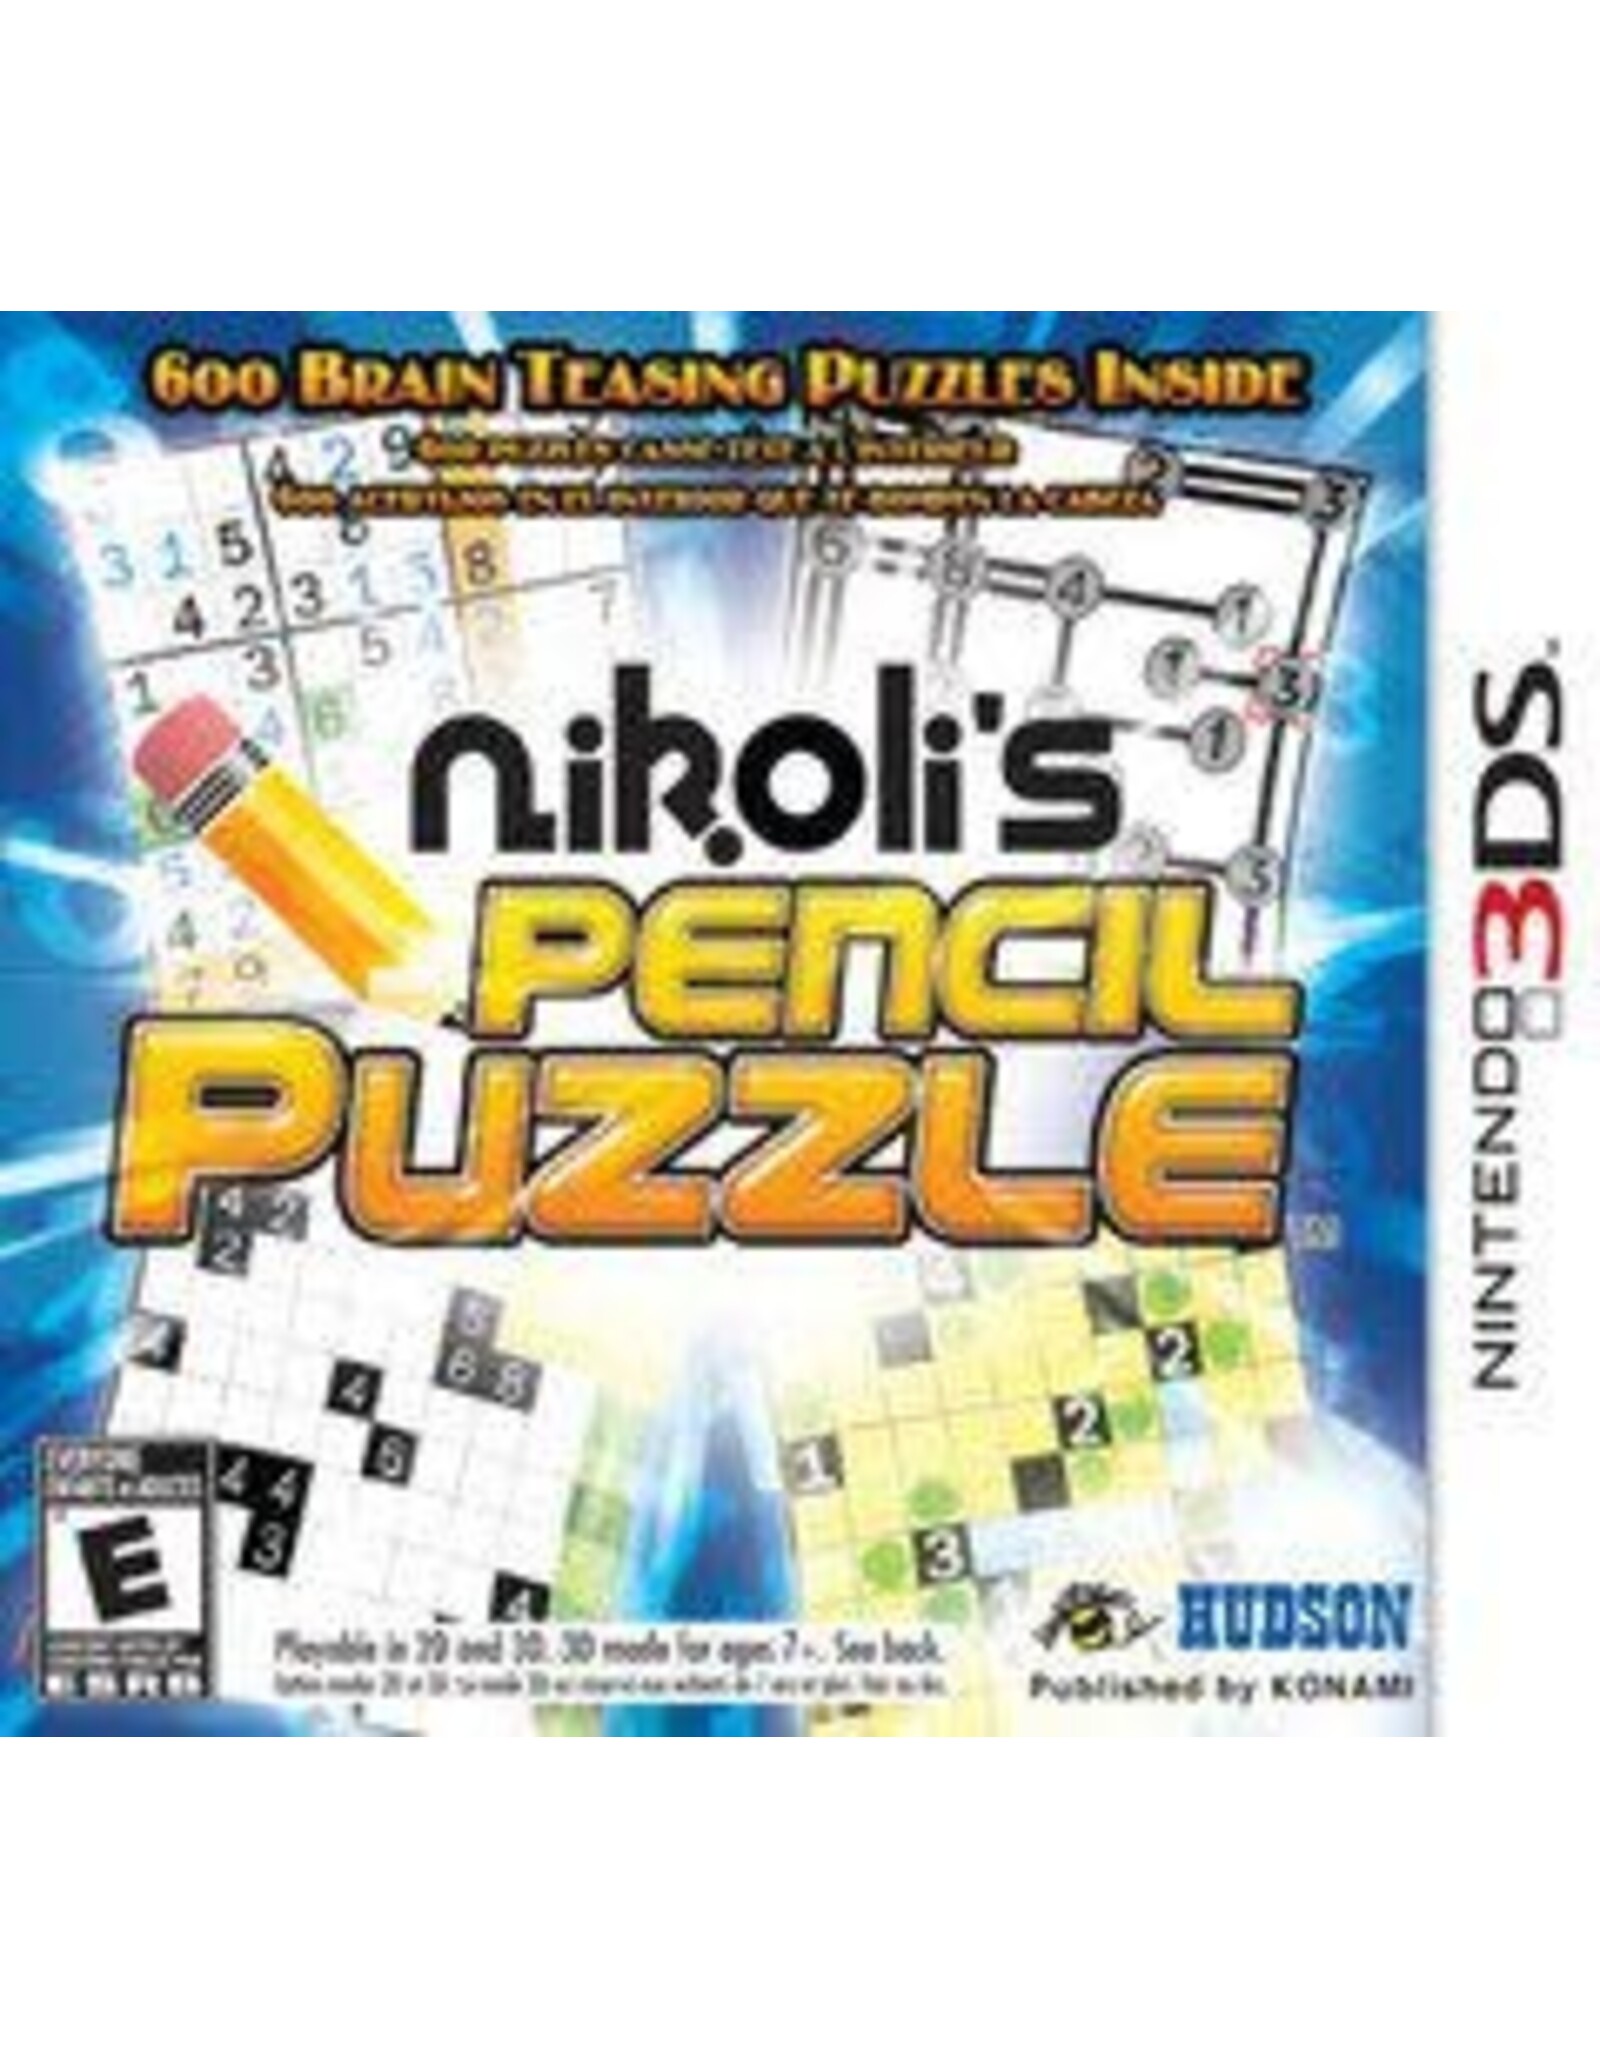 Nintendo 3DS Nikoli's Pencil Puzzle (CiB, Damaged Sleeve)